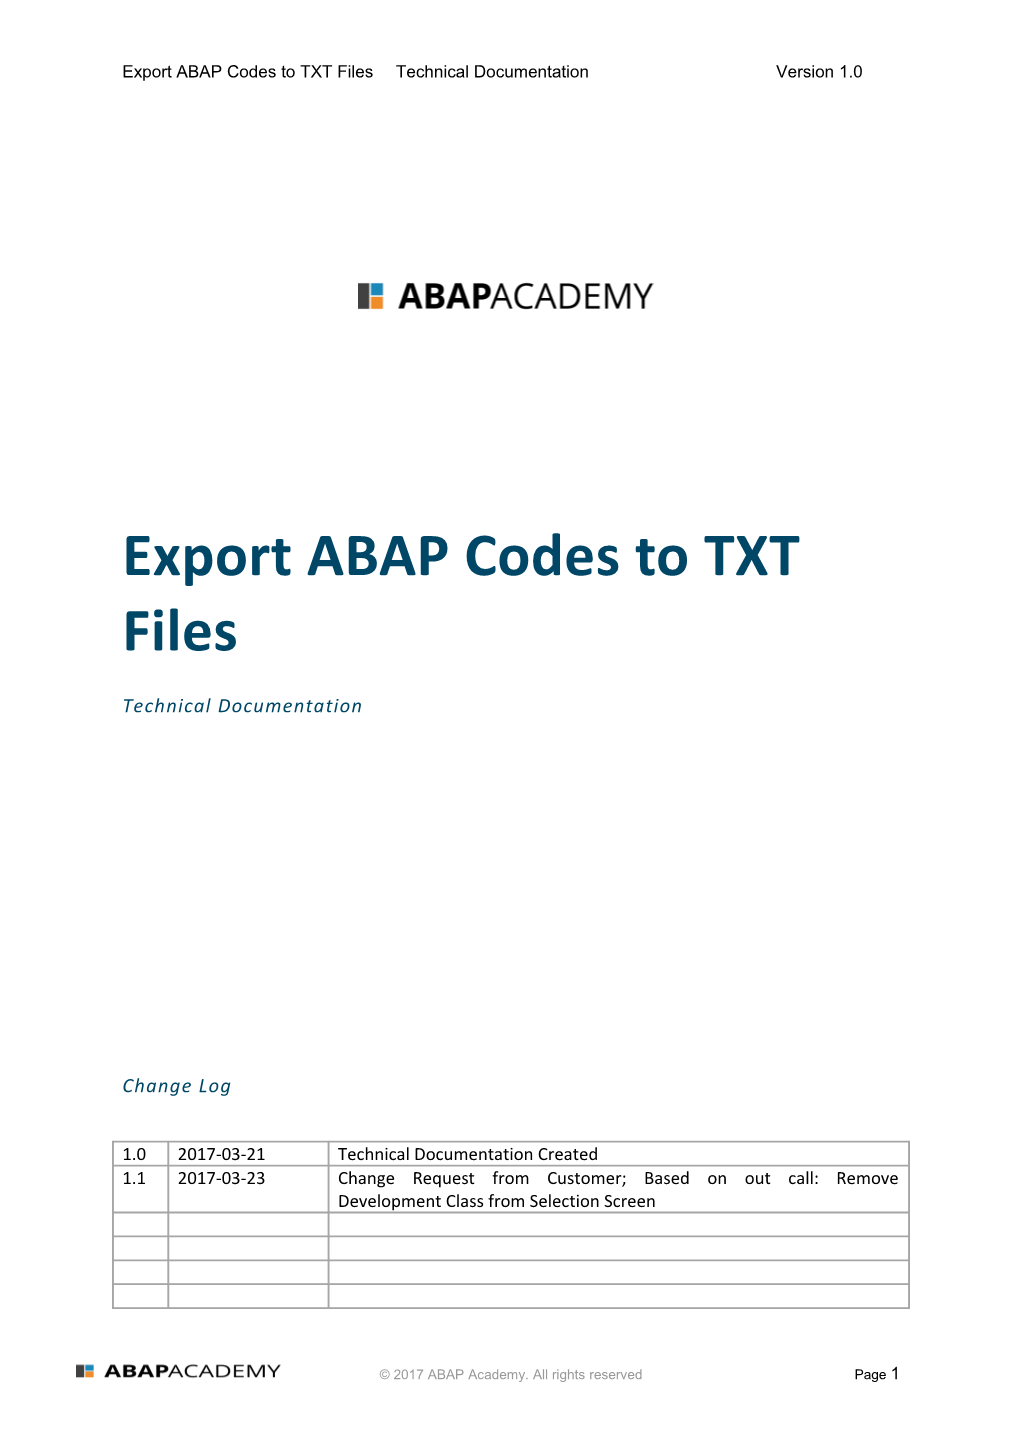 ABAP Academy Technical Documentation Template